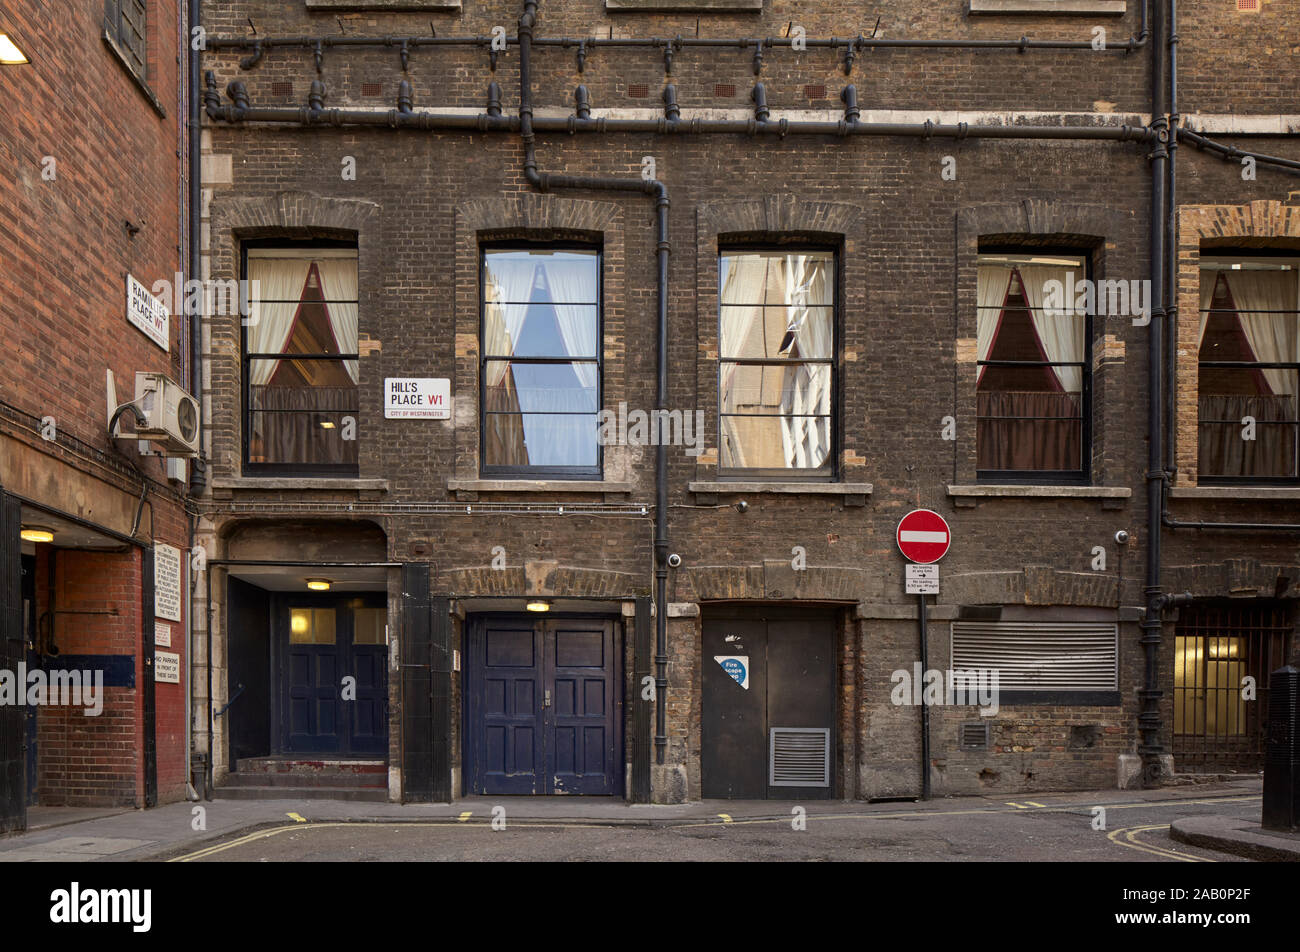 Hill's Place, Hintereingang des London Palladium, Westminster, London Stockfoto